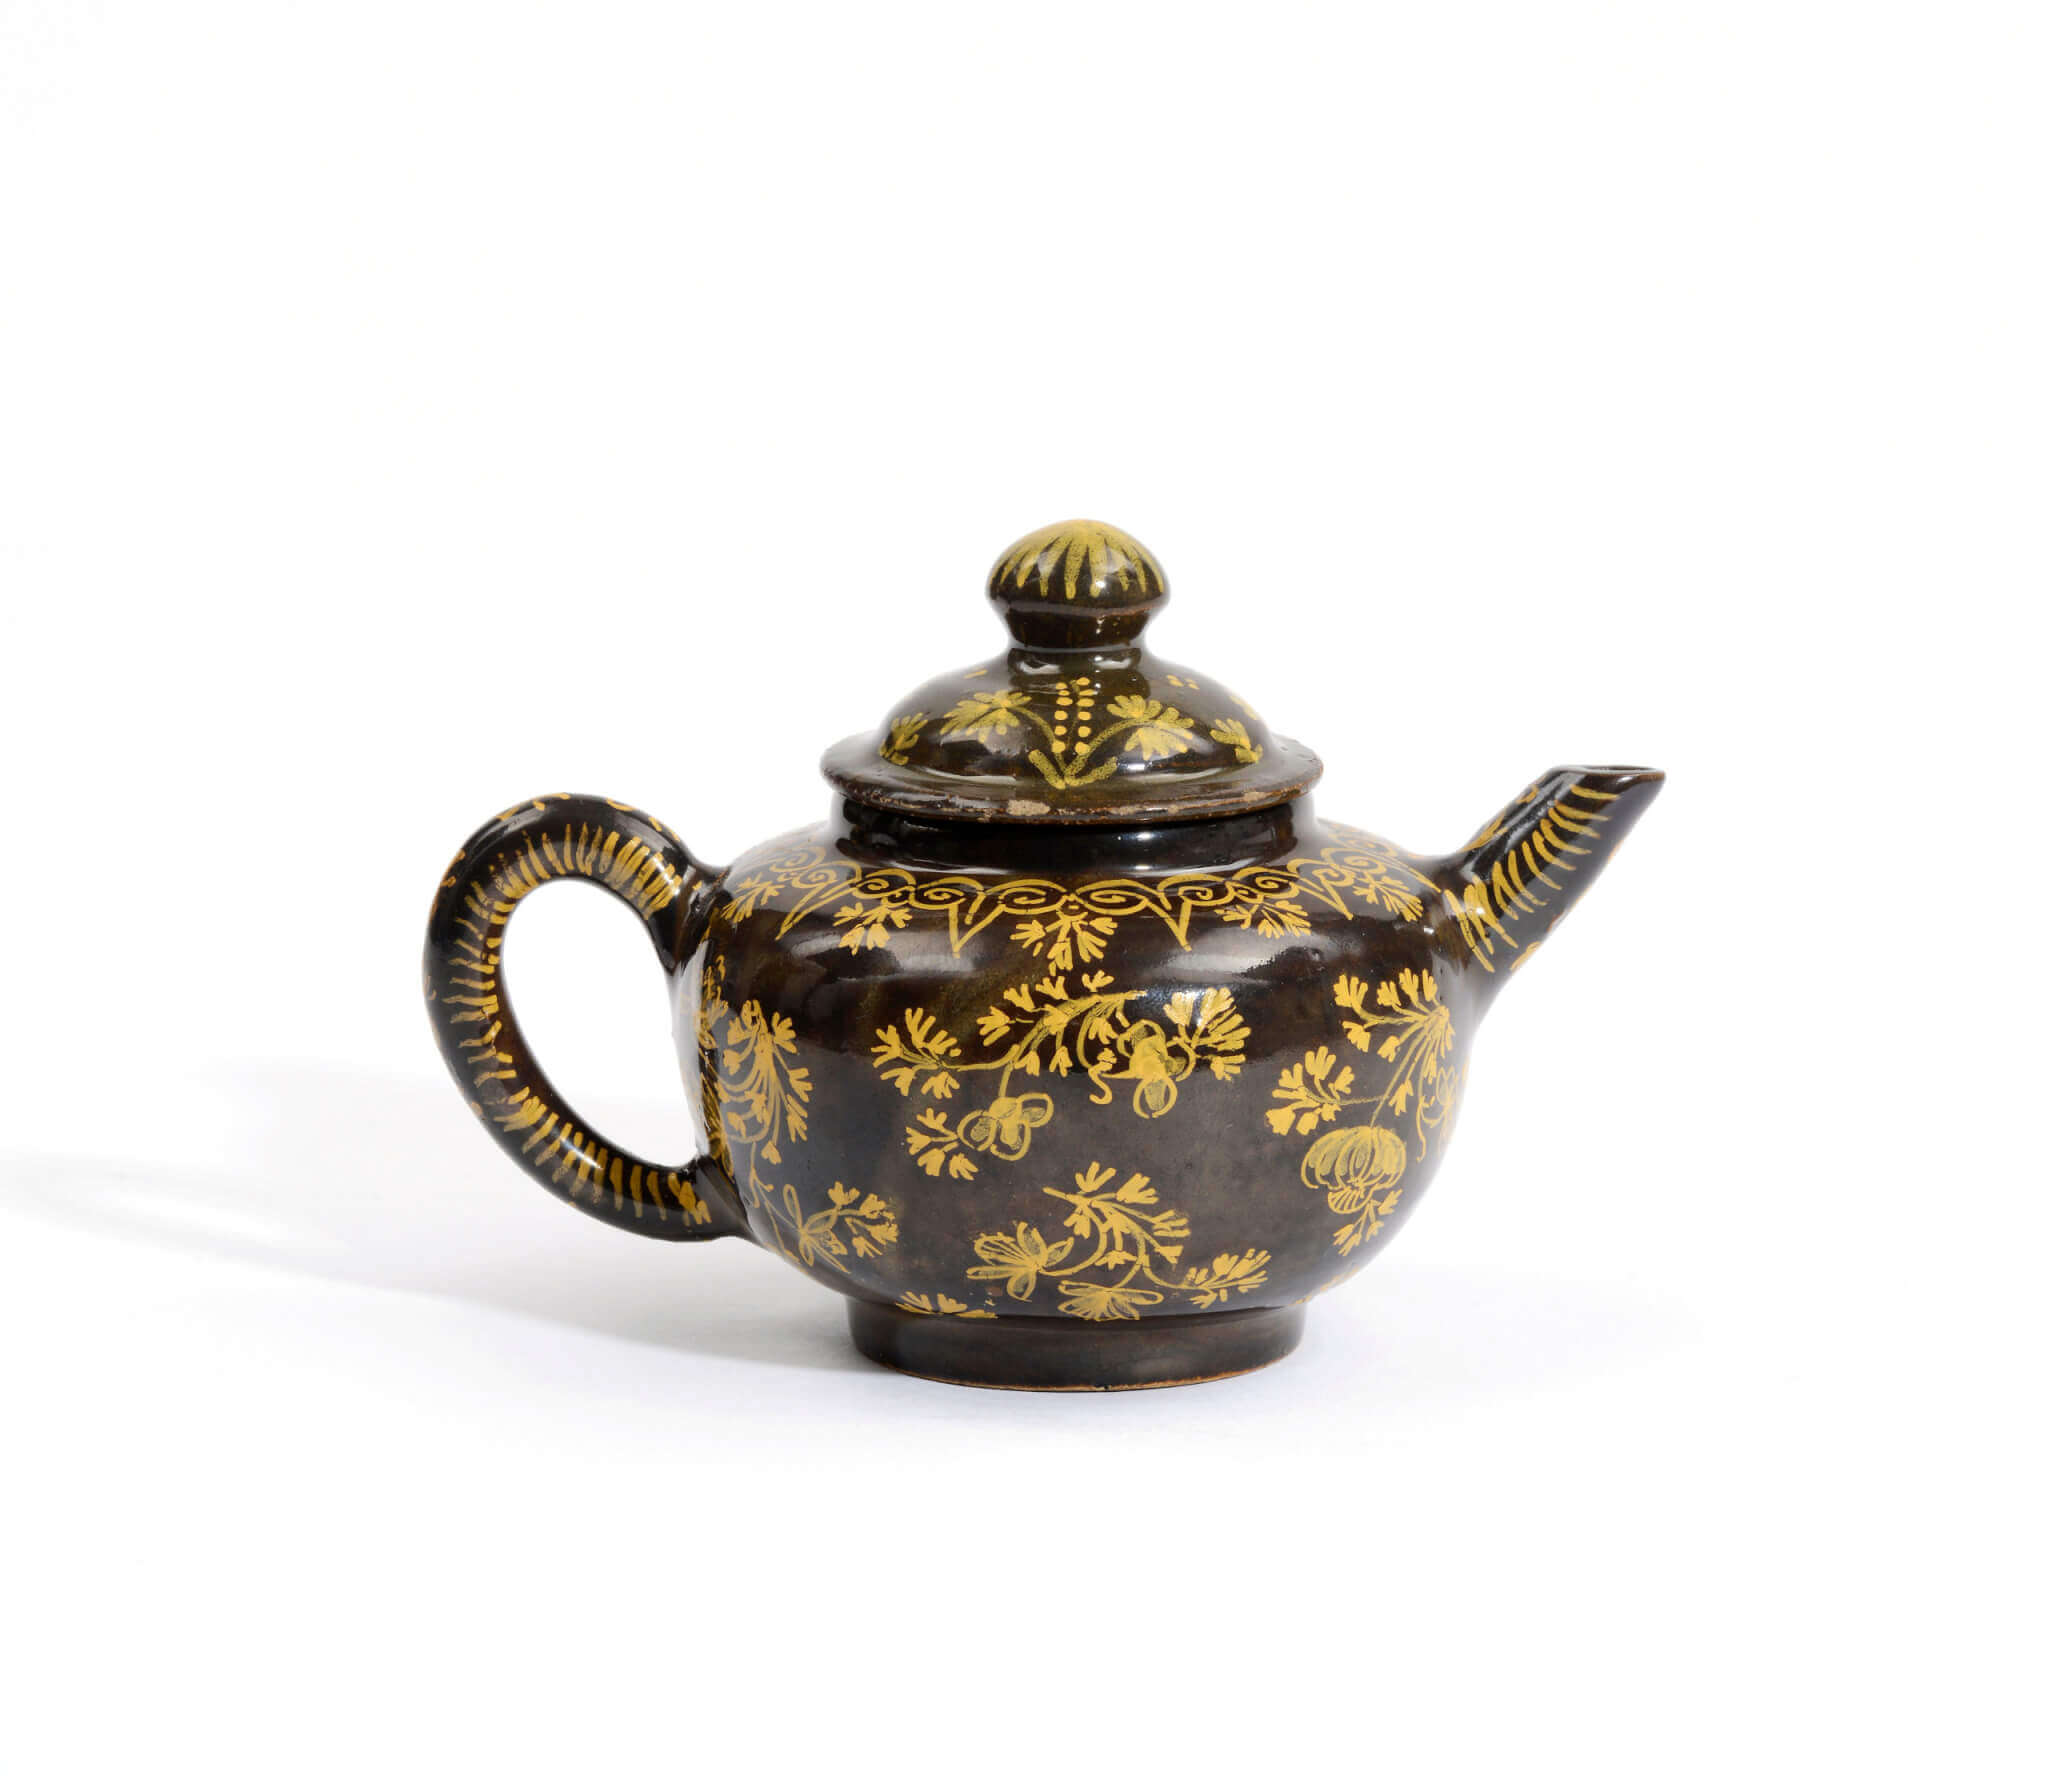 brown-glazed teapot